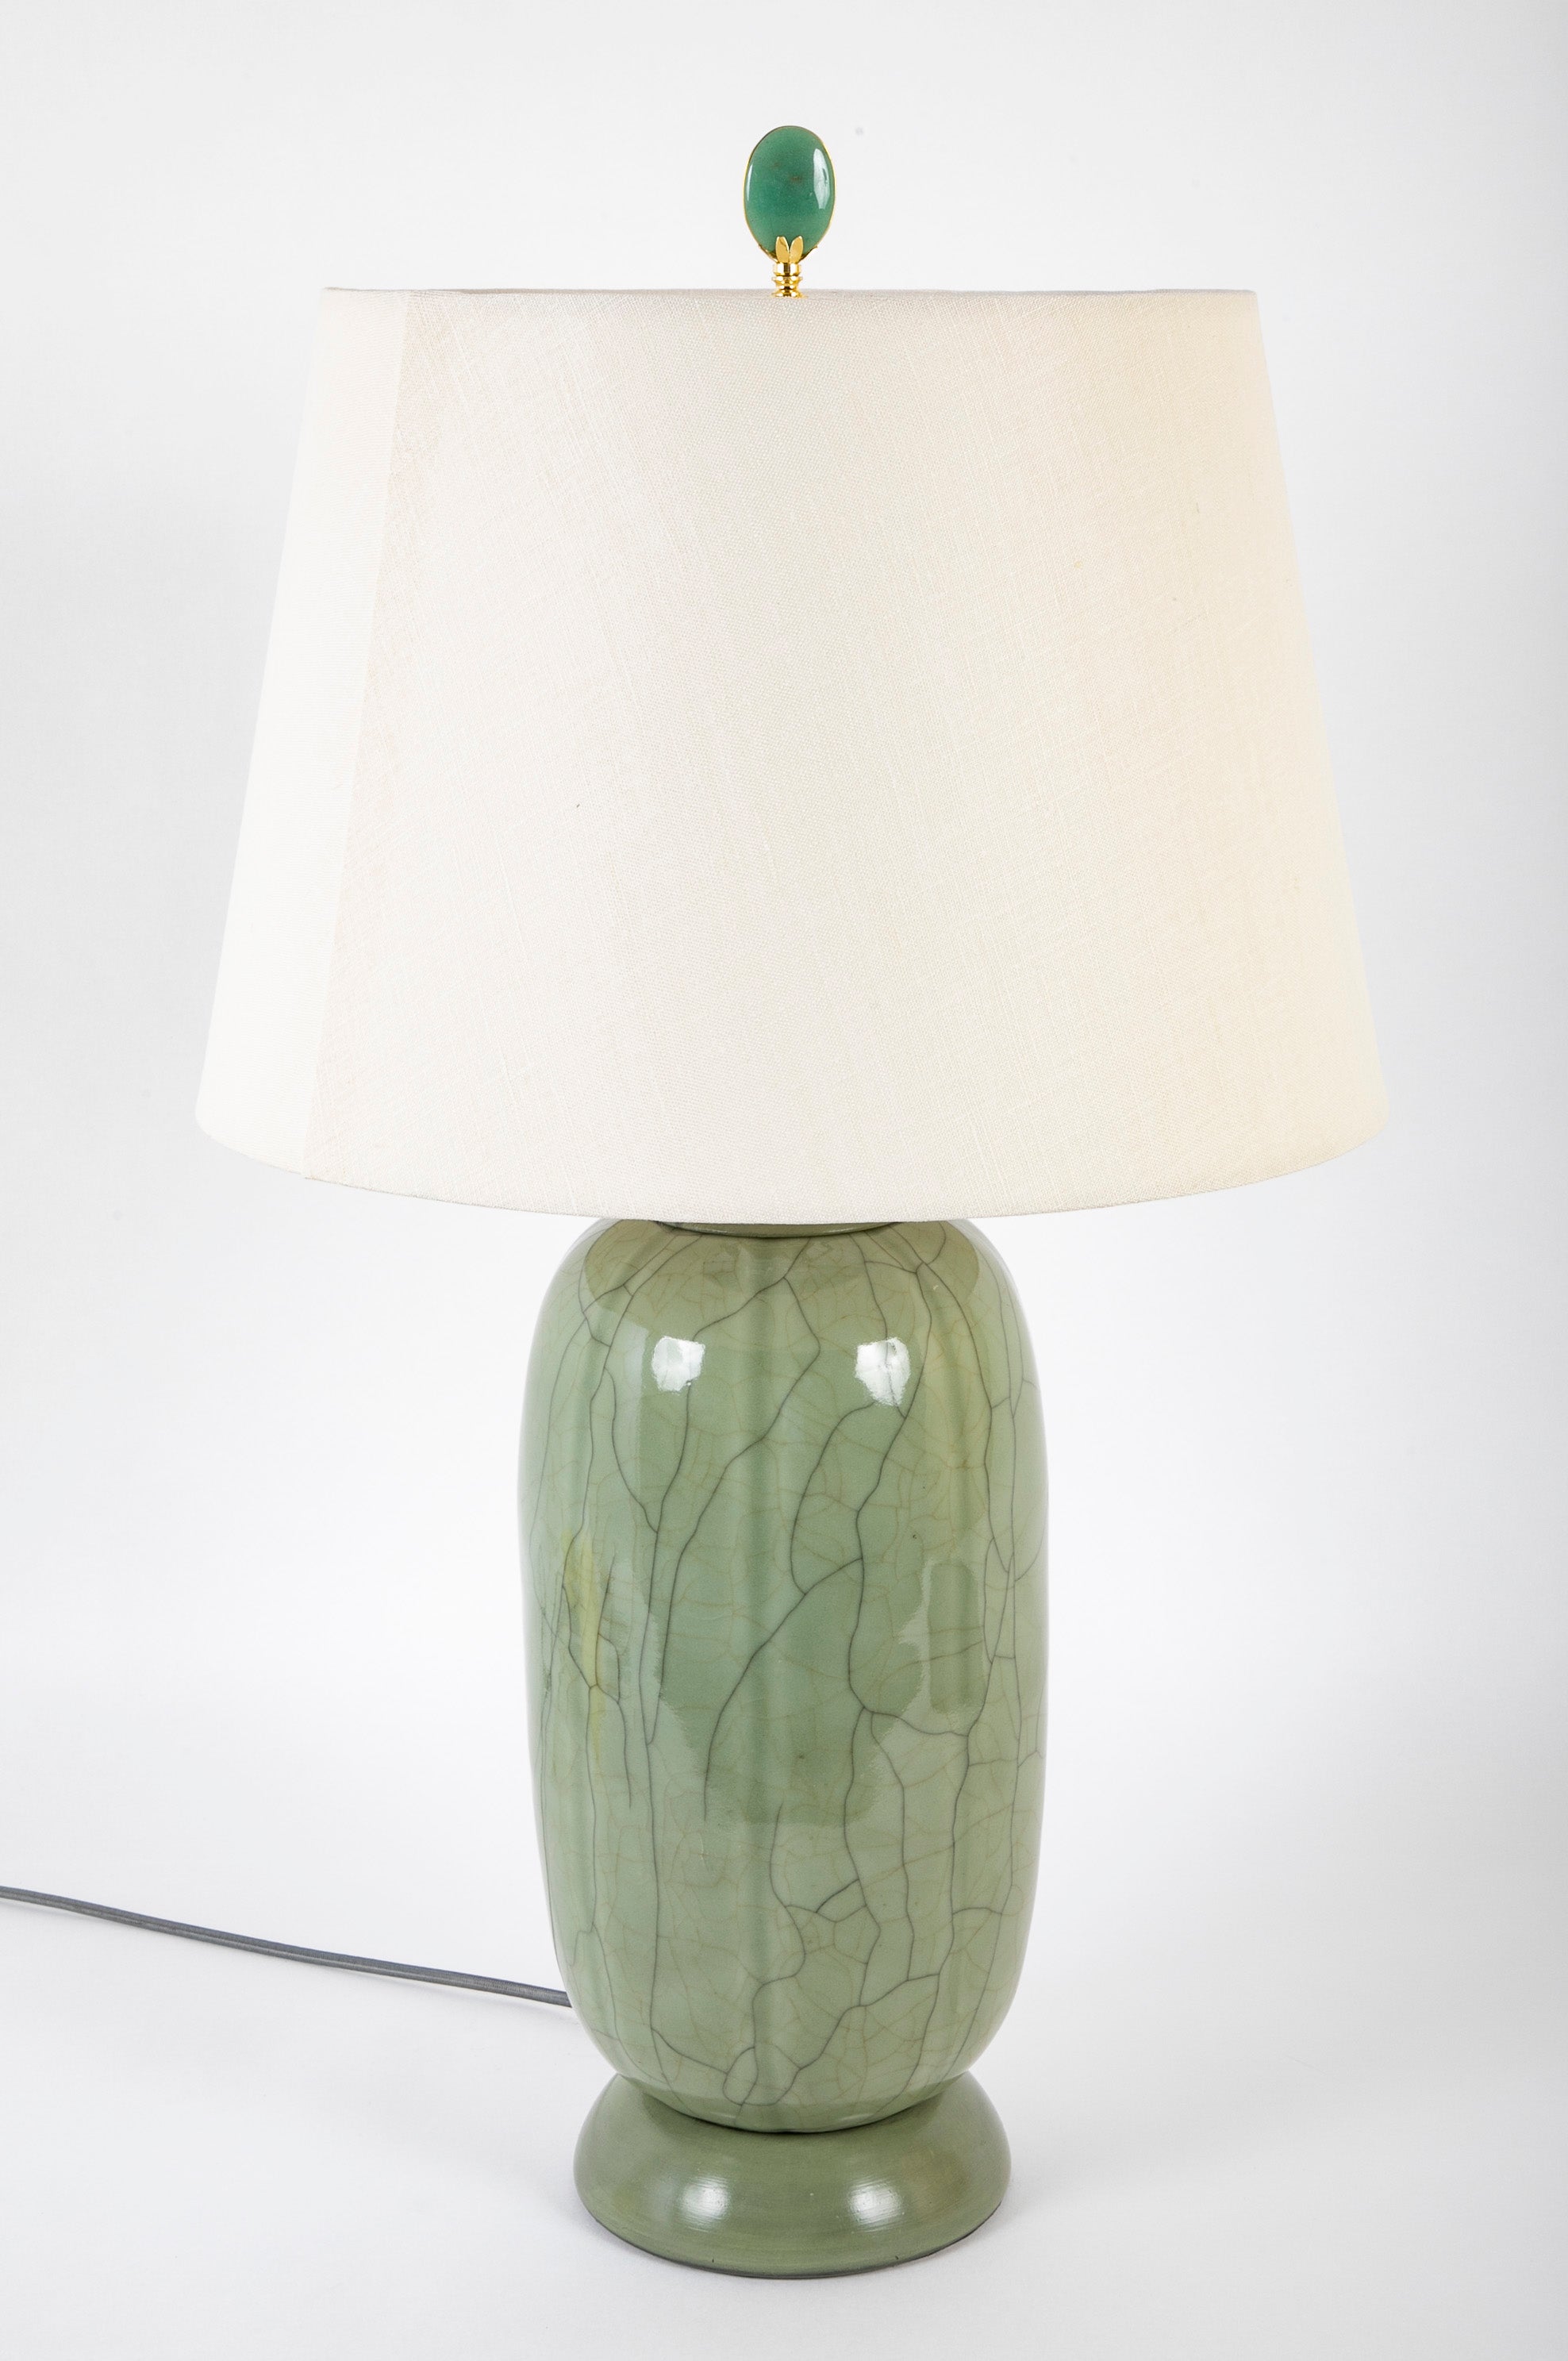 Japanese Jade Glaze Crackleware Vase now a Lamp